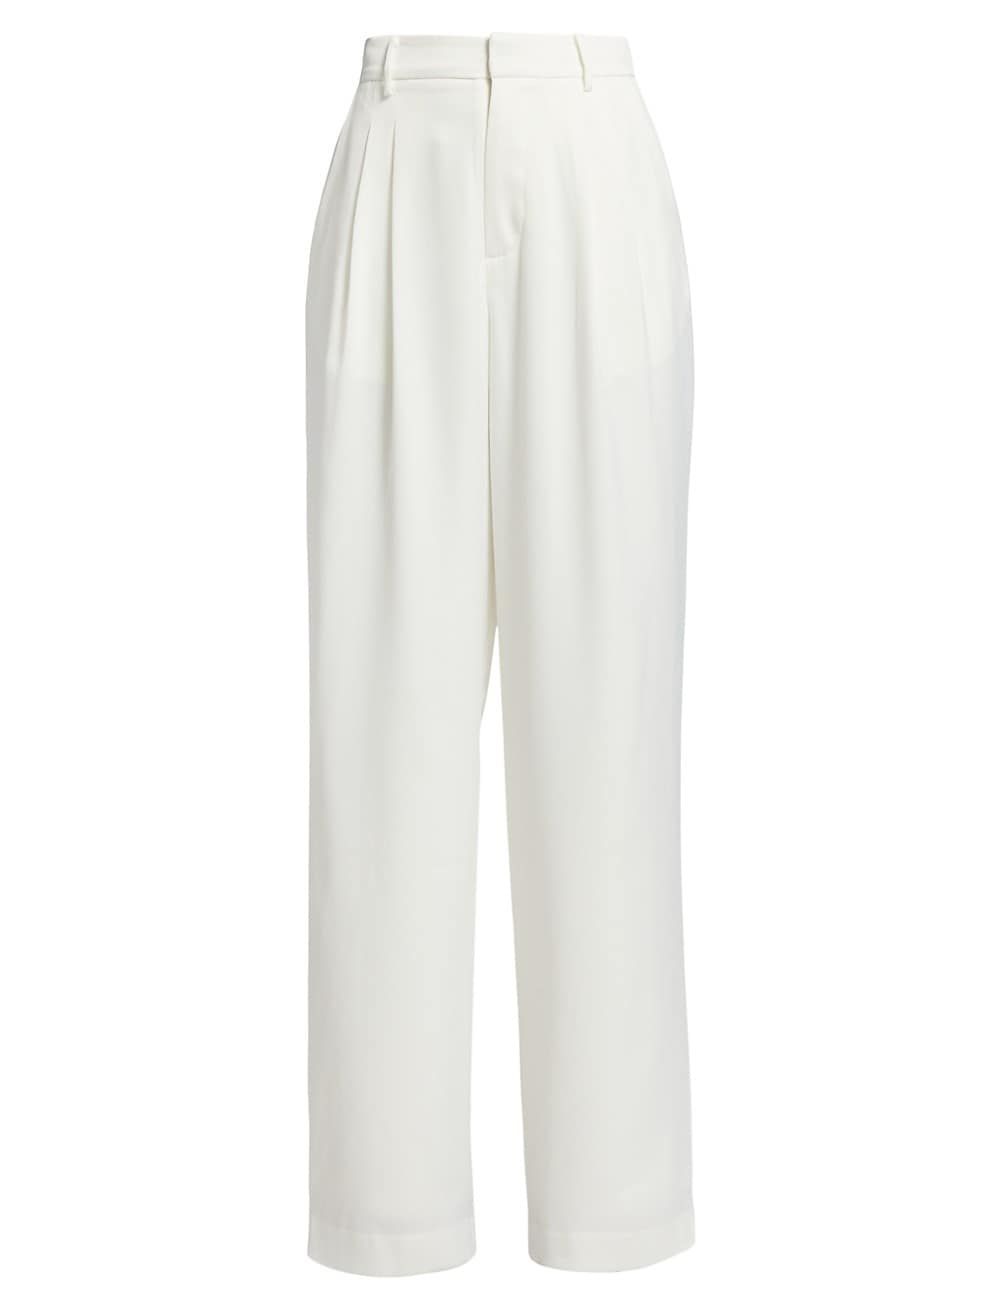 Wayf Tailored Pleated Pants | Saks Fifth Avenue